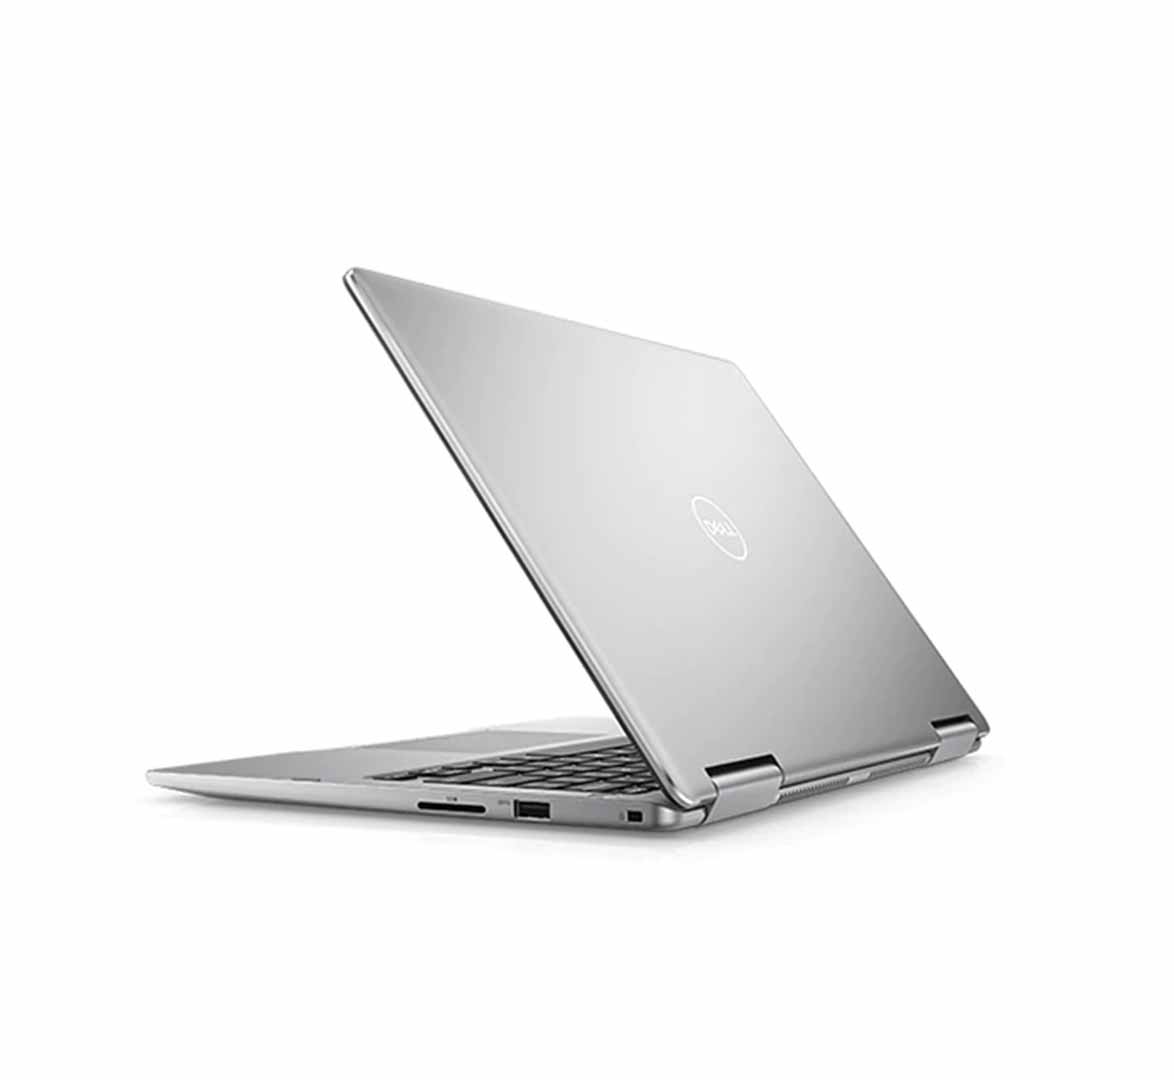 Dell Inspiron 7373 Business Laptop, Intel Core i5-10th Gen CPU, 8GB RAM, 256GB SSD, 13 inch Touchscreen, Windows 10 Pro, Refurbished Laptop